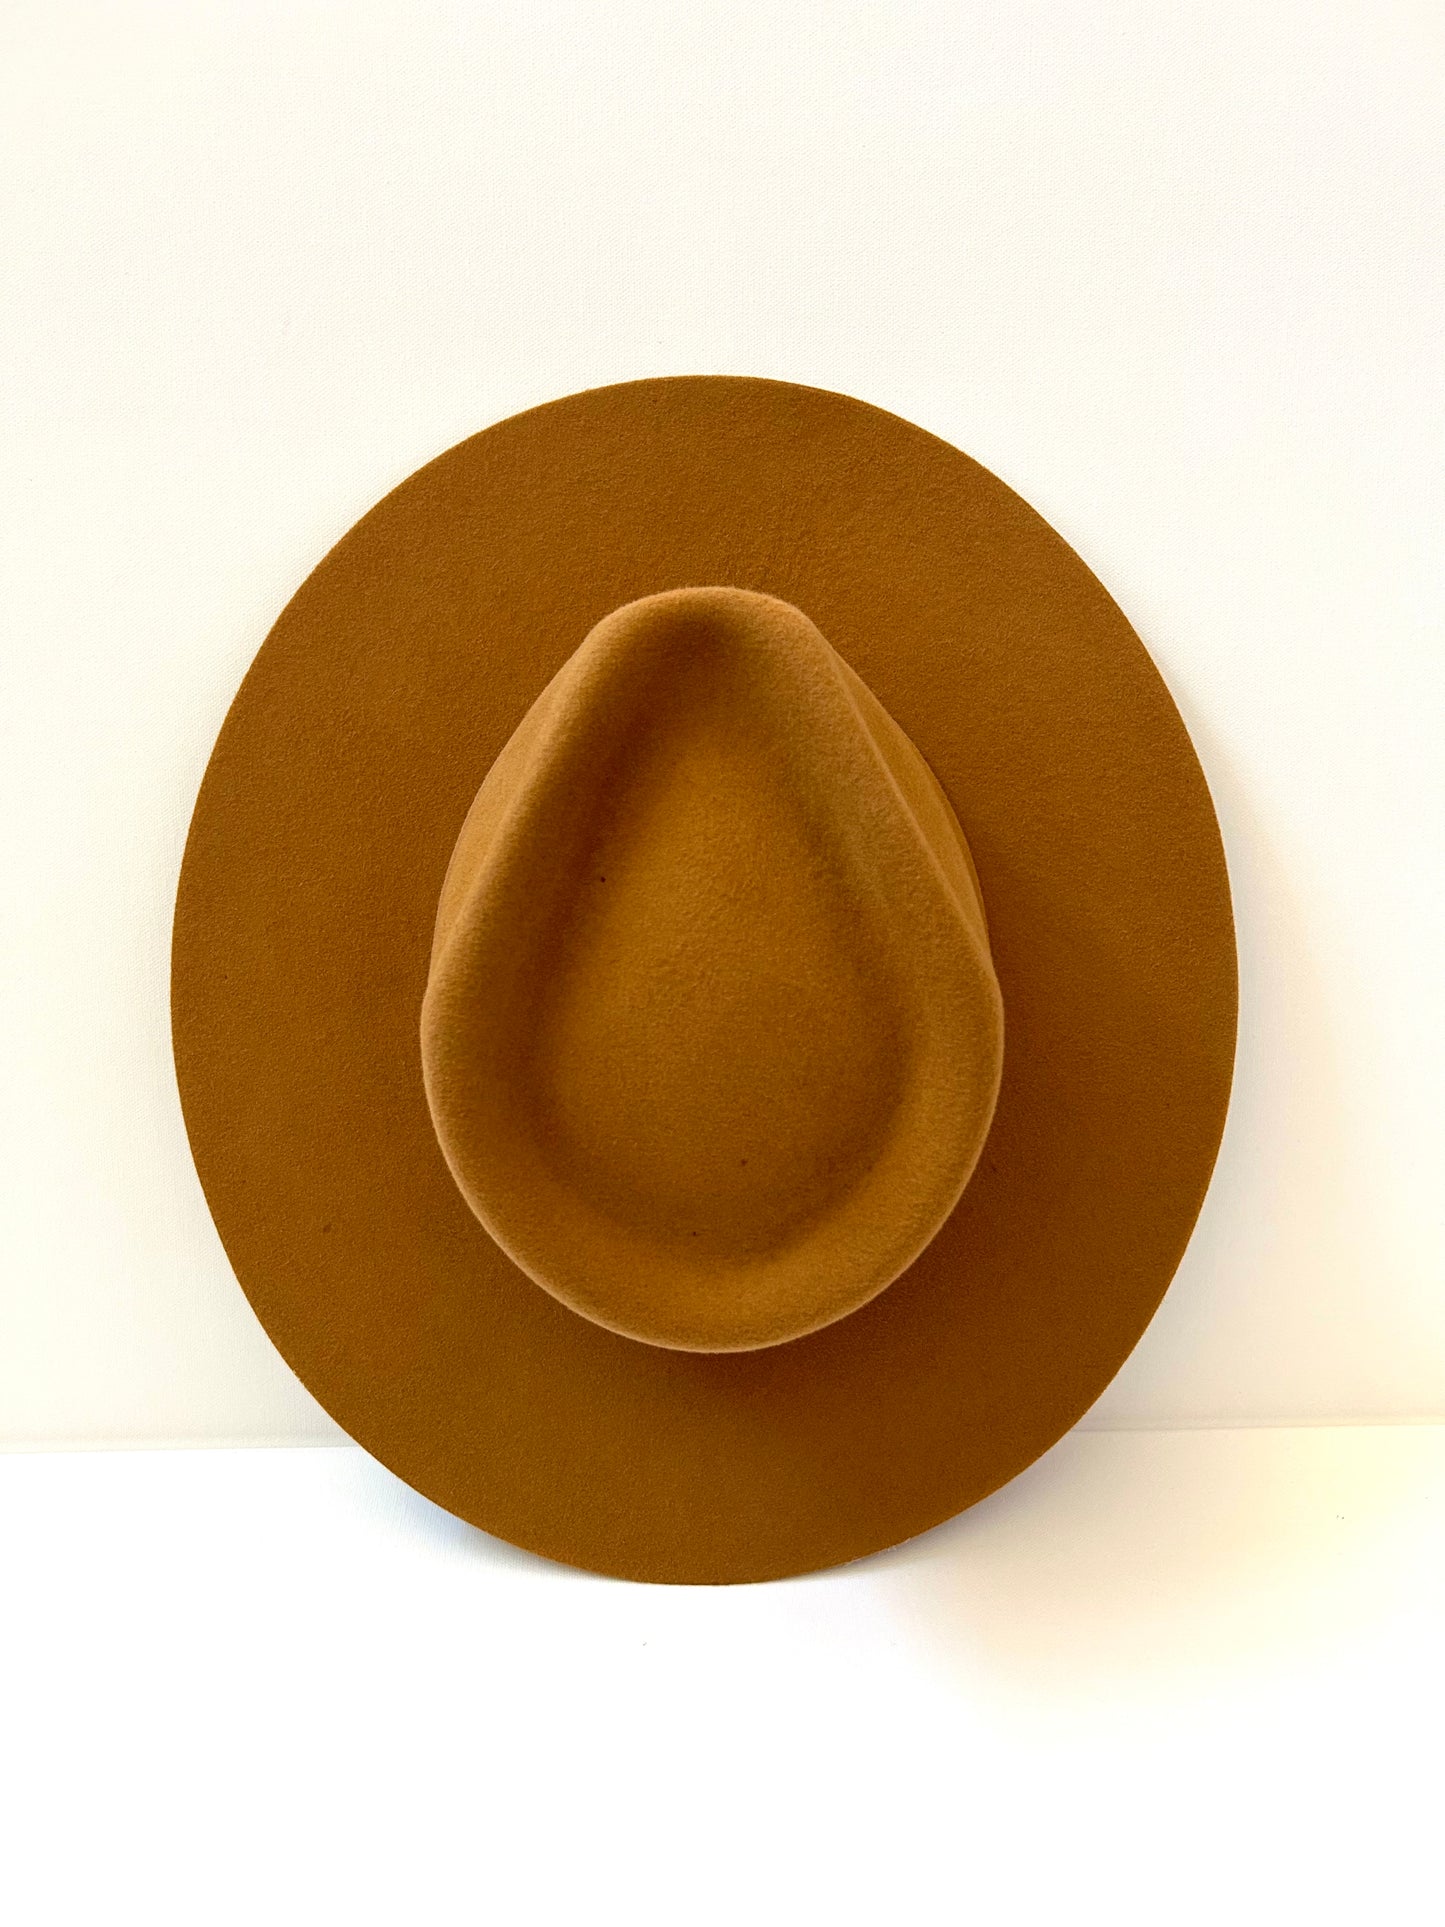 PREORDER Emery Merino Wool Teardrop Rancher Hat - Caramel